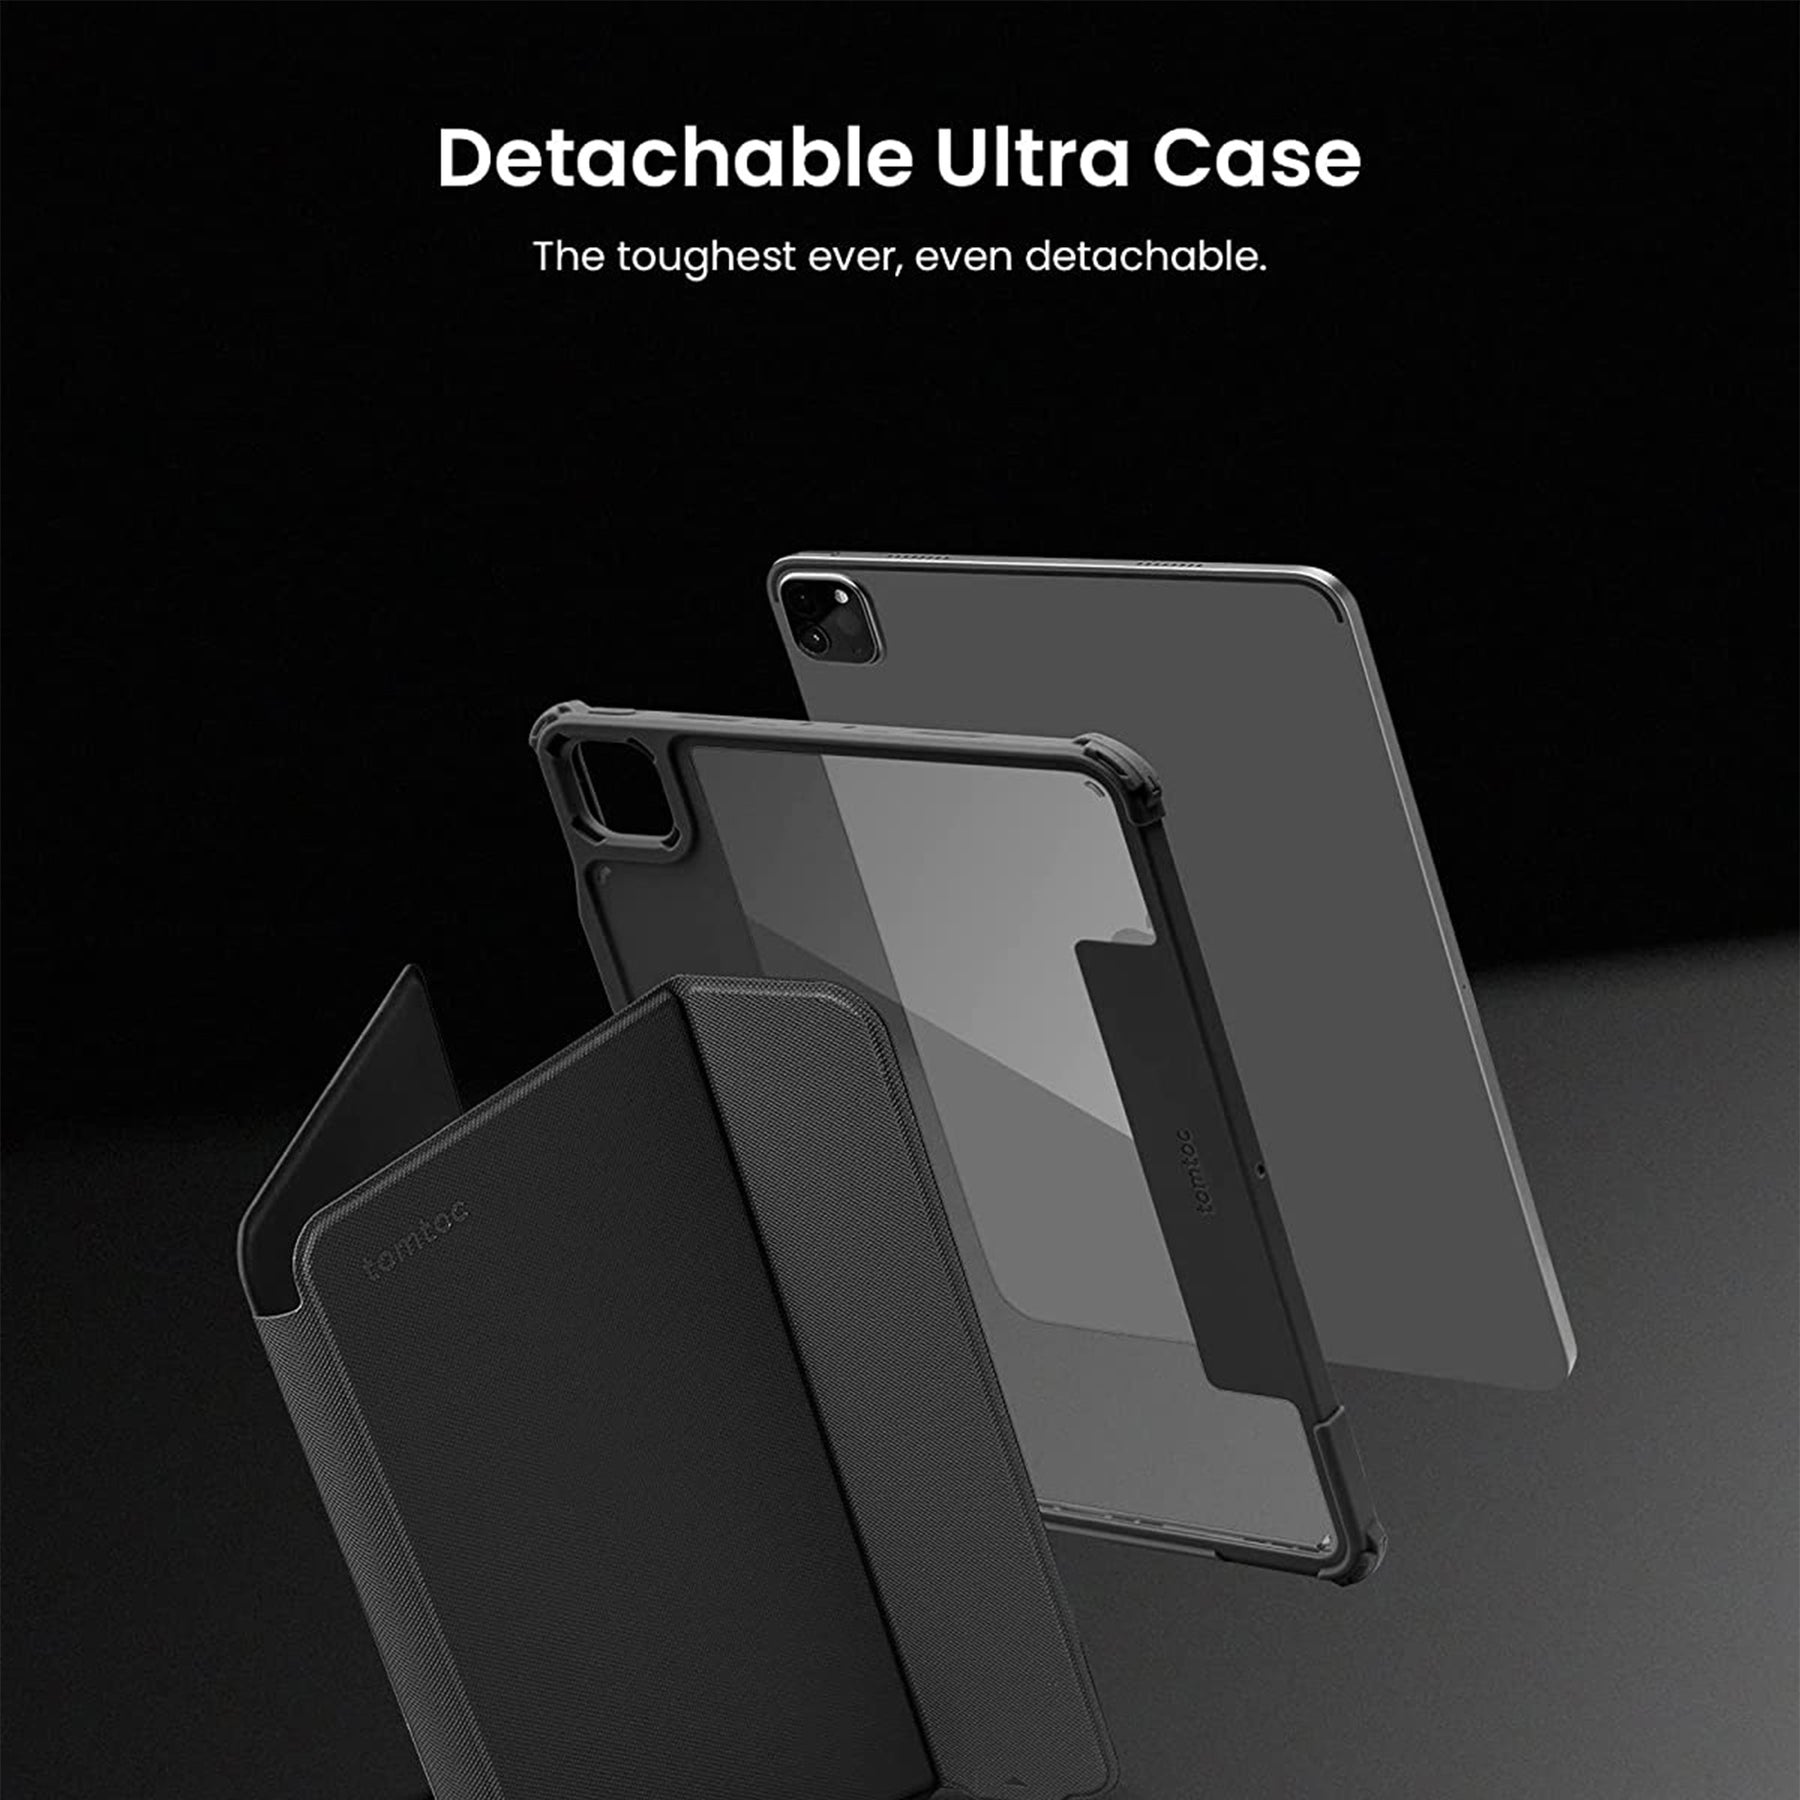 tomtoc 12.9 Inch iPad Pro Detachable Protective Case - Diamond Black